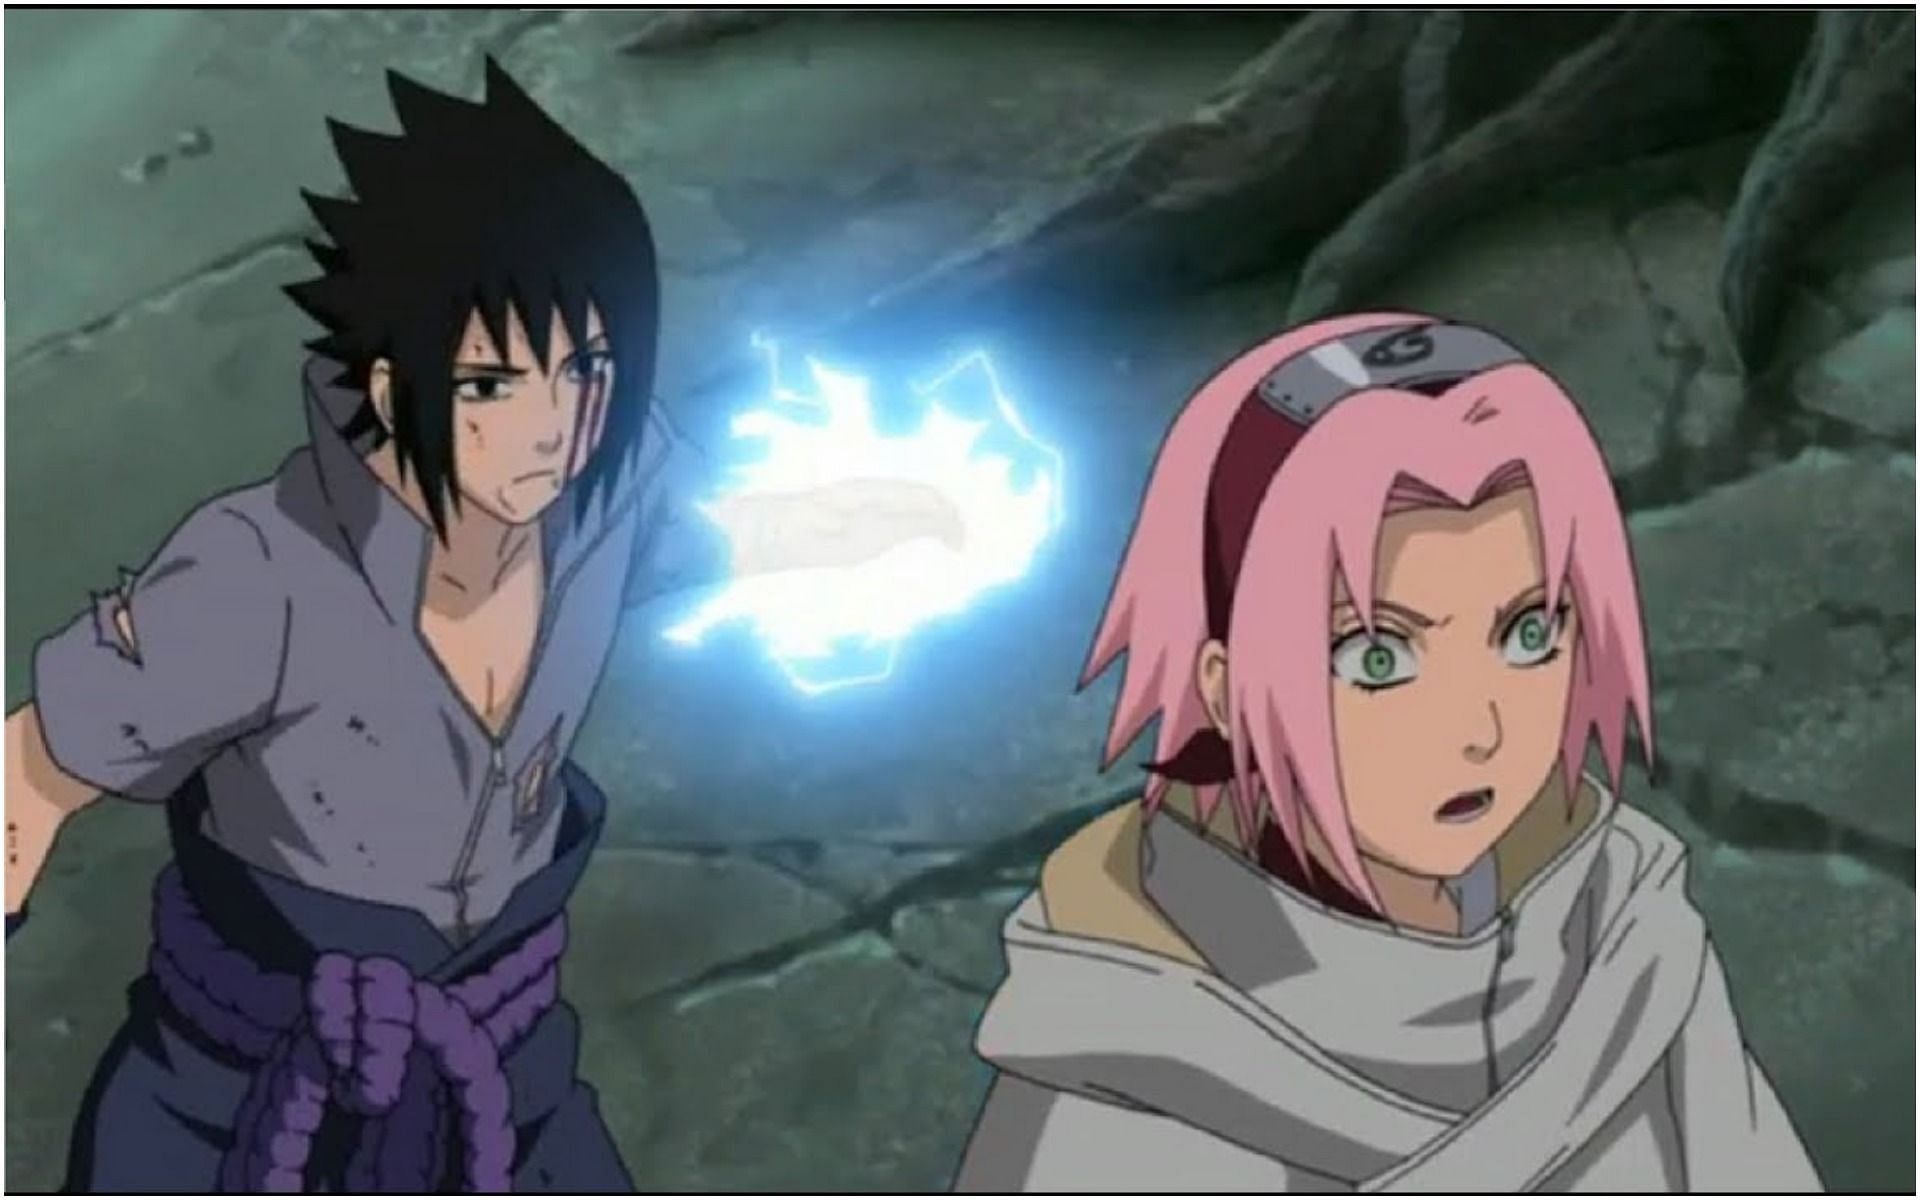 Possible reasons why Sasuke tried to kill Sakura in the series (image via Pierrot)